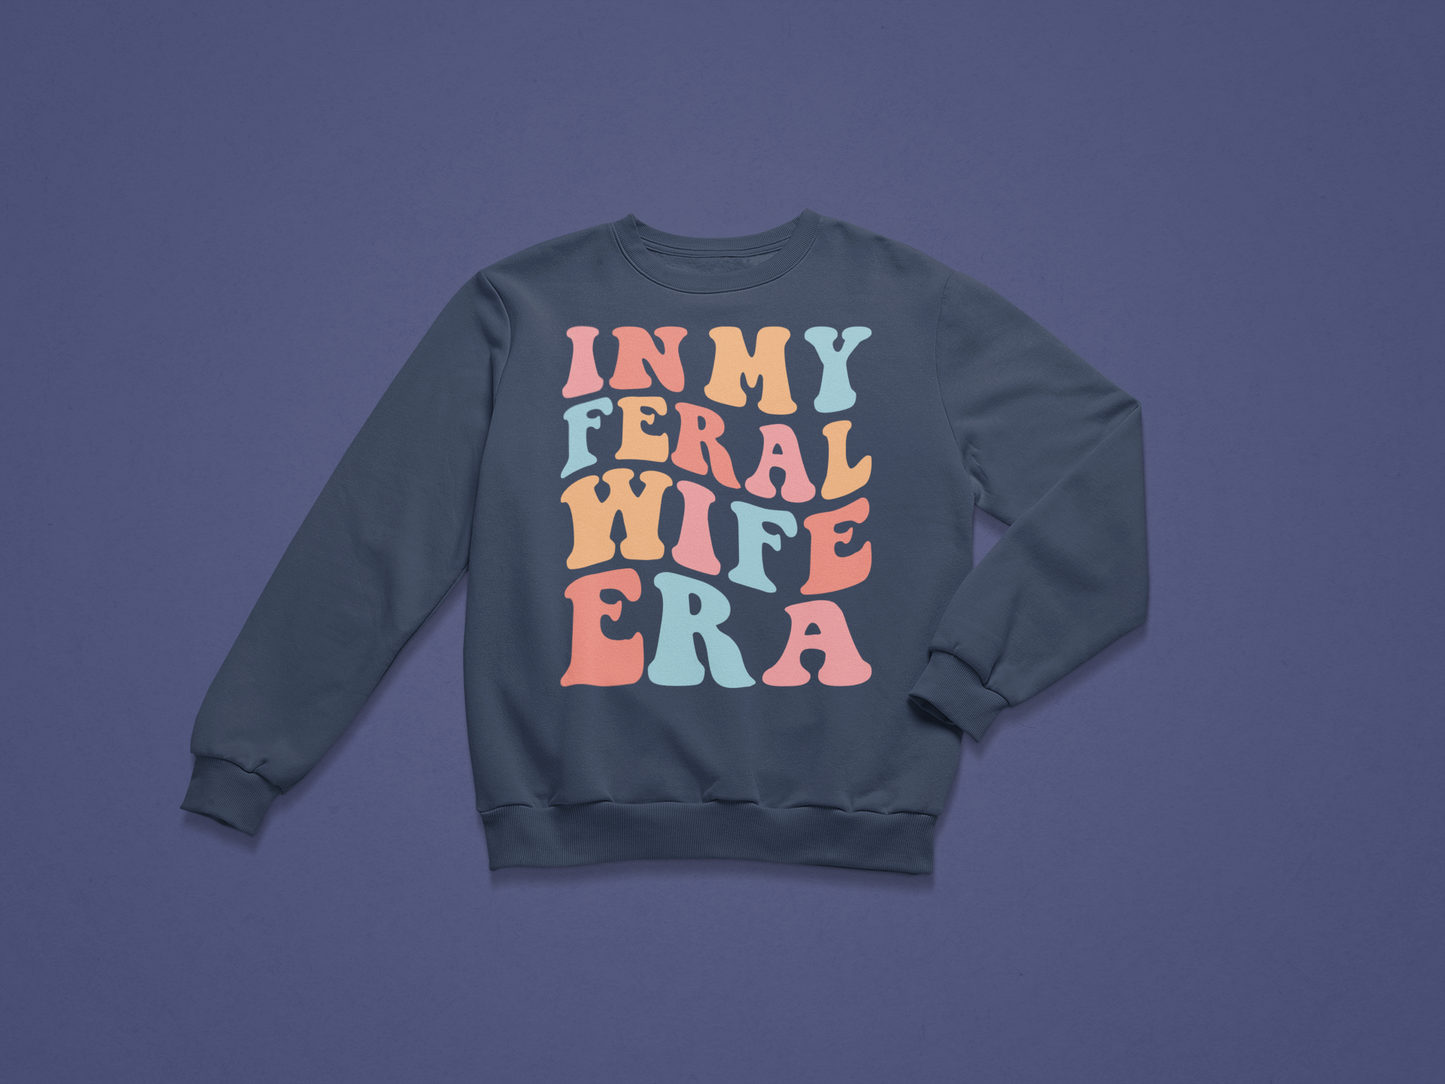 Feral Wife Era Crewneck Sweatshirt